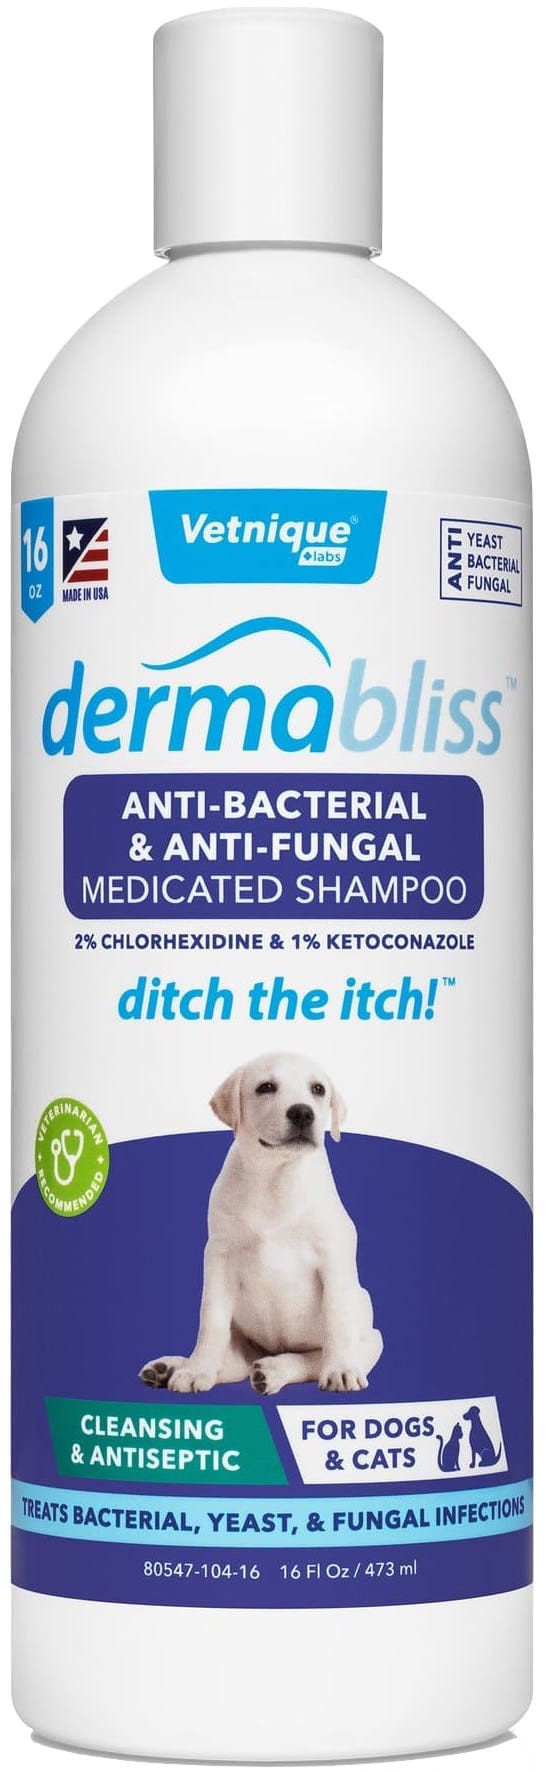 Dermabliss Anti-Bacterial & Anti-Fungal Shampoo 16 oz 1